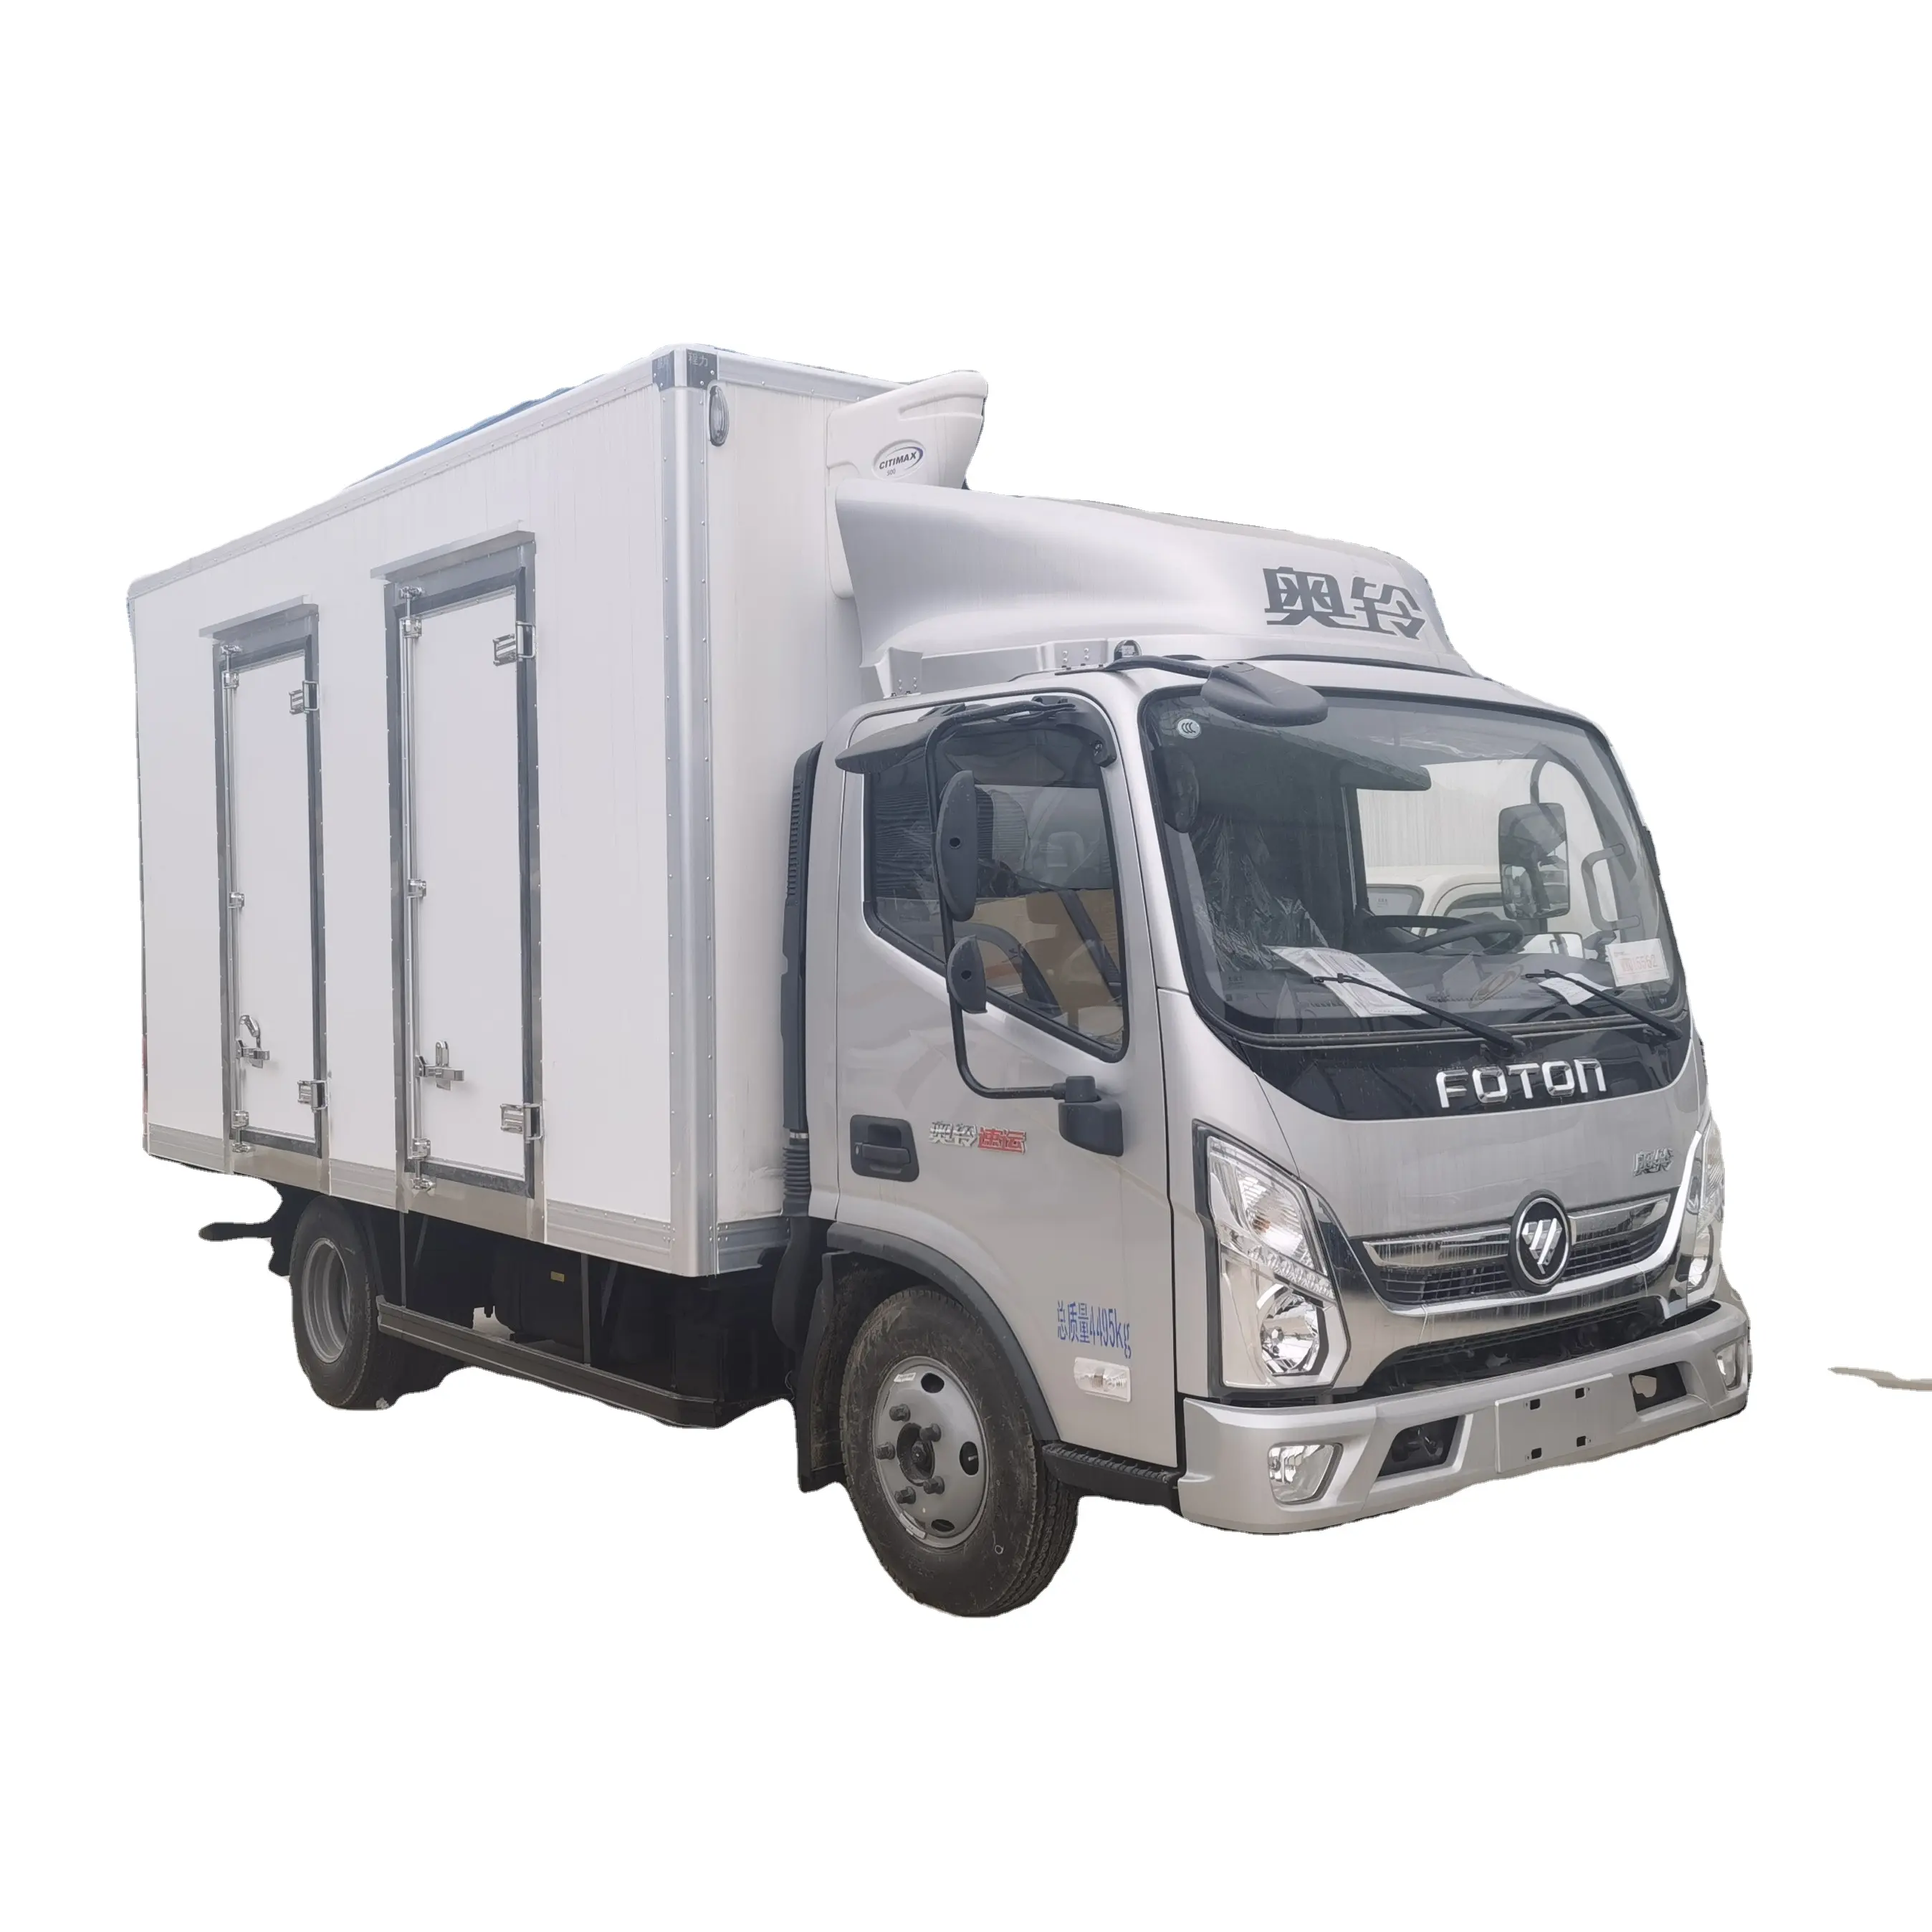 Замороженный пищевой фургон Foton, грузовик с приводом 4x2, Холодильный фургон, коробка для грузовика, охлаждающая коробка, грузовик